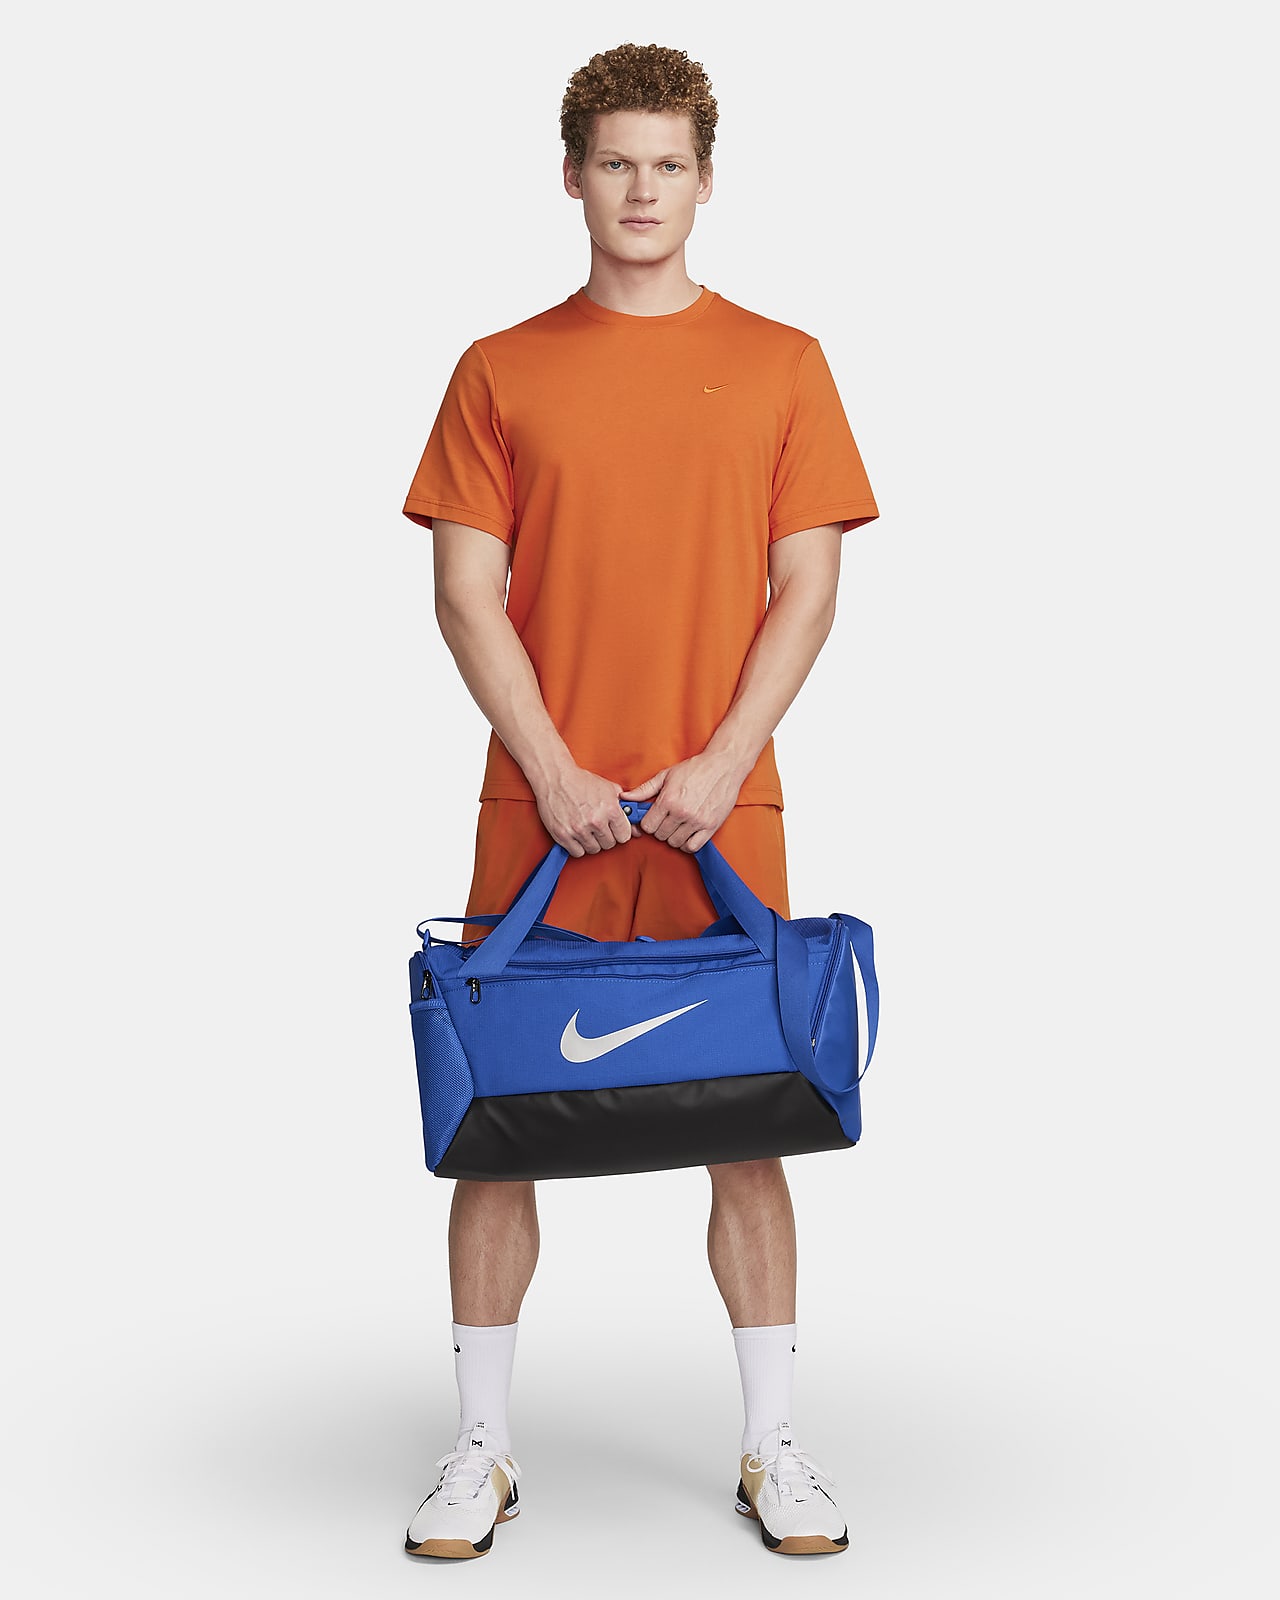 Nike Brasilia 9.5 Training Duffel Bag (Small, 41L). Nike AT